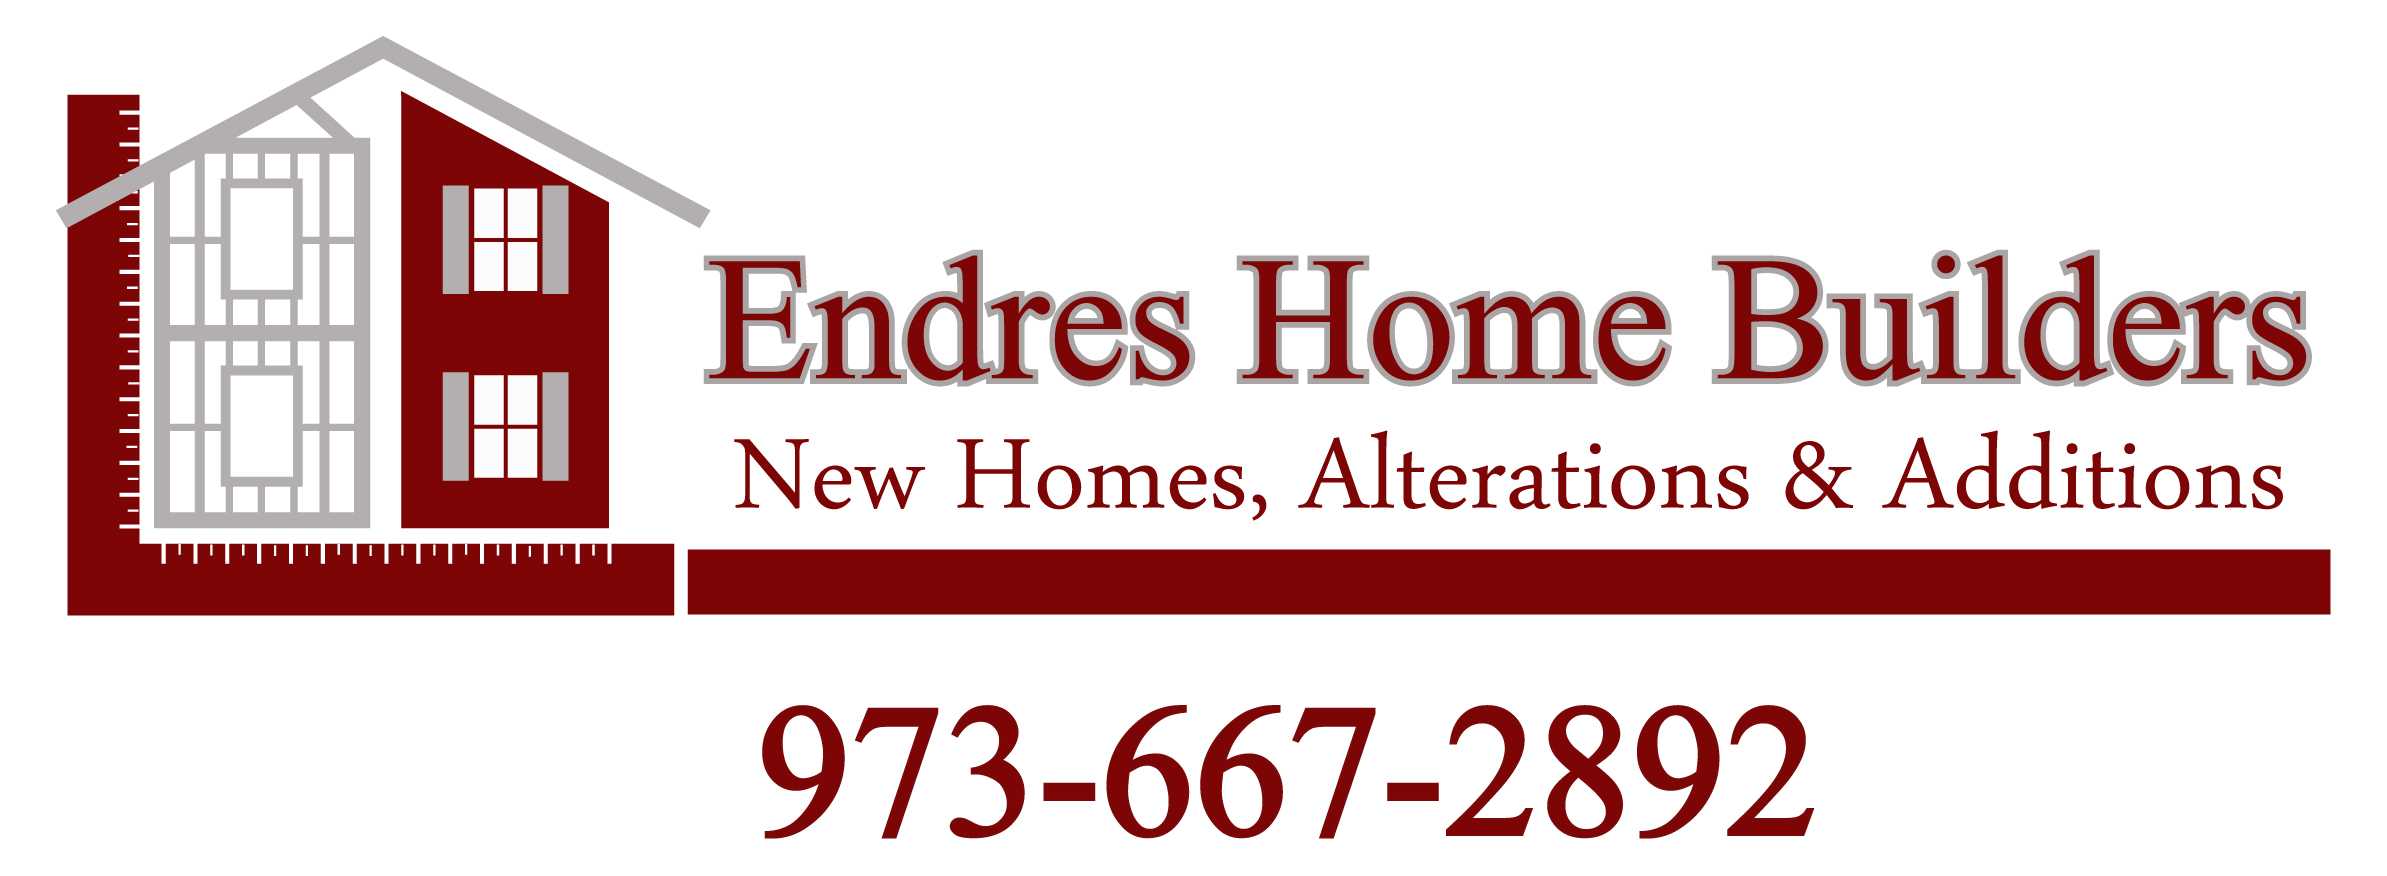 Endres Home Builders, Inc. company logo